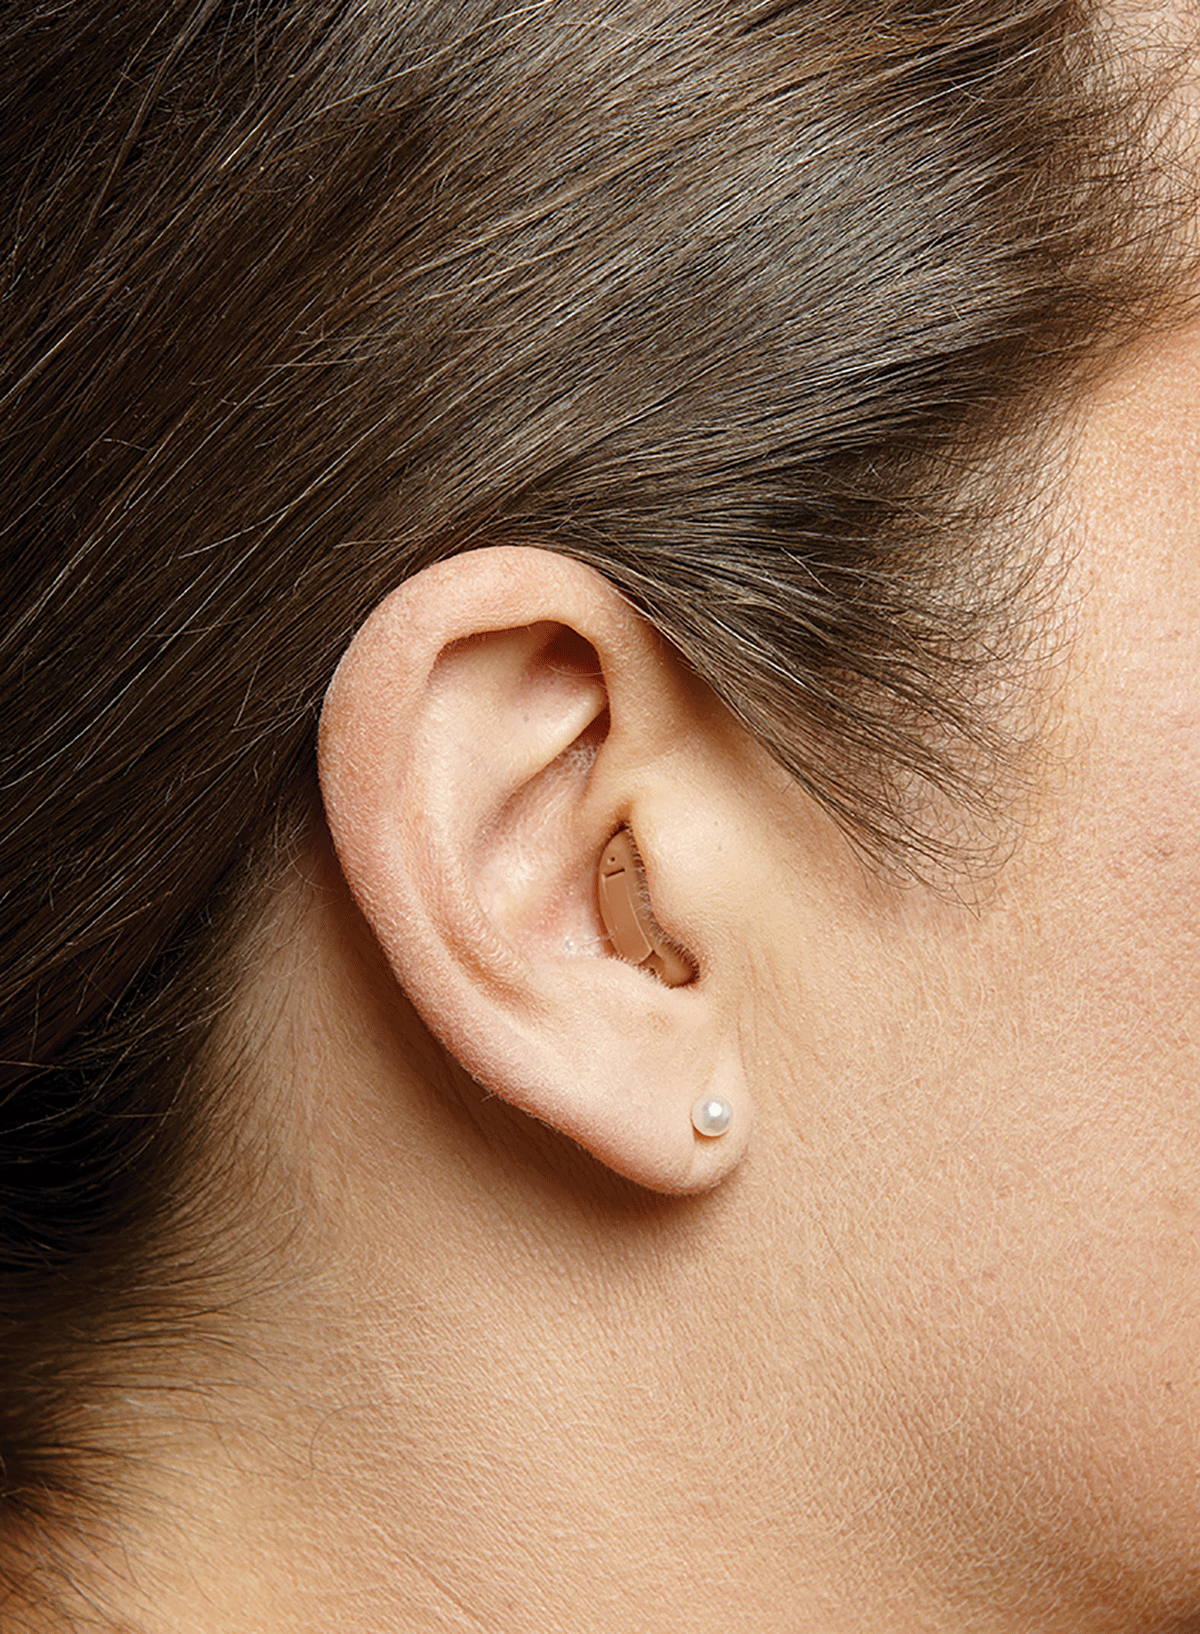 Hearing Aid in Ear